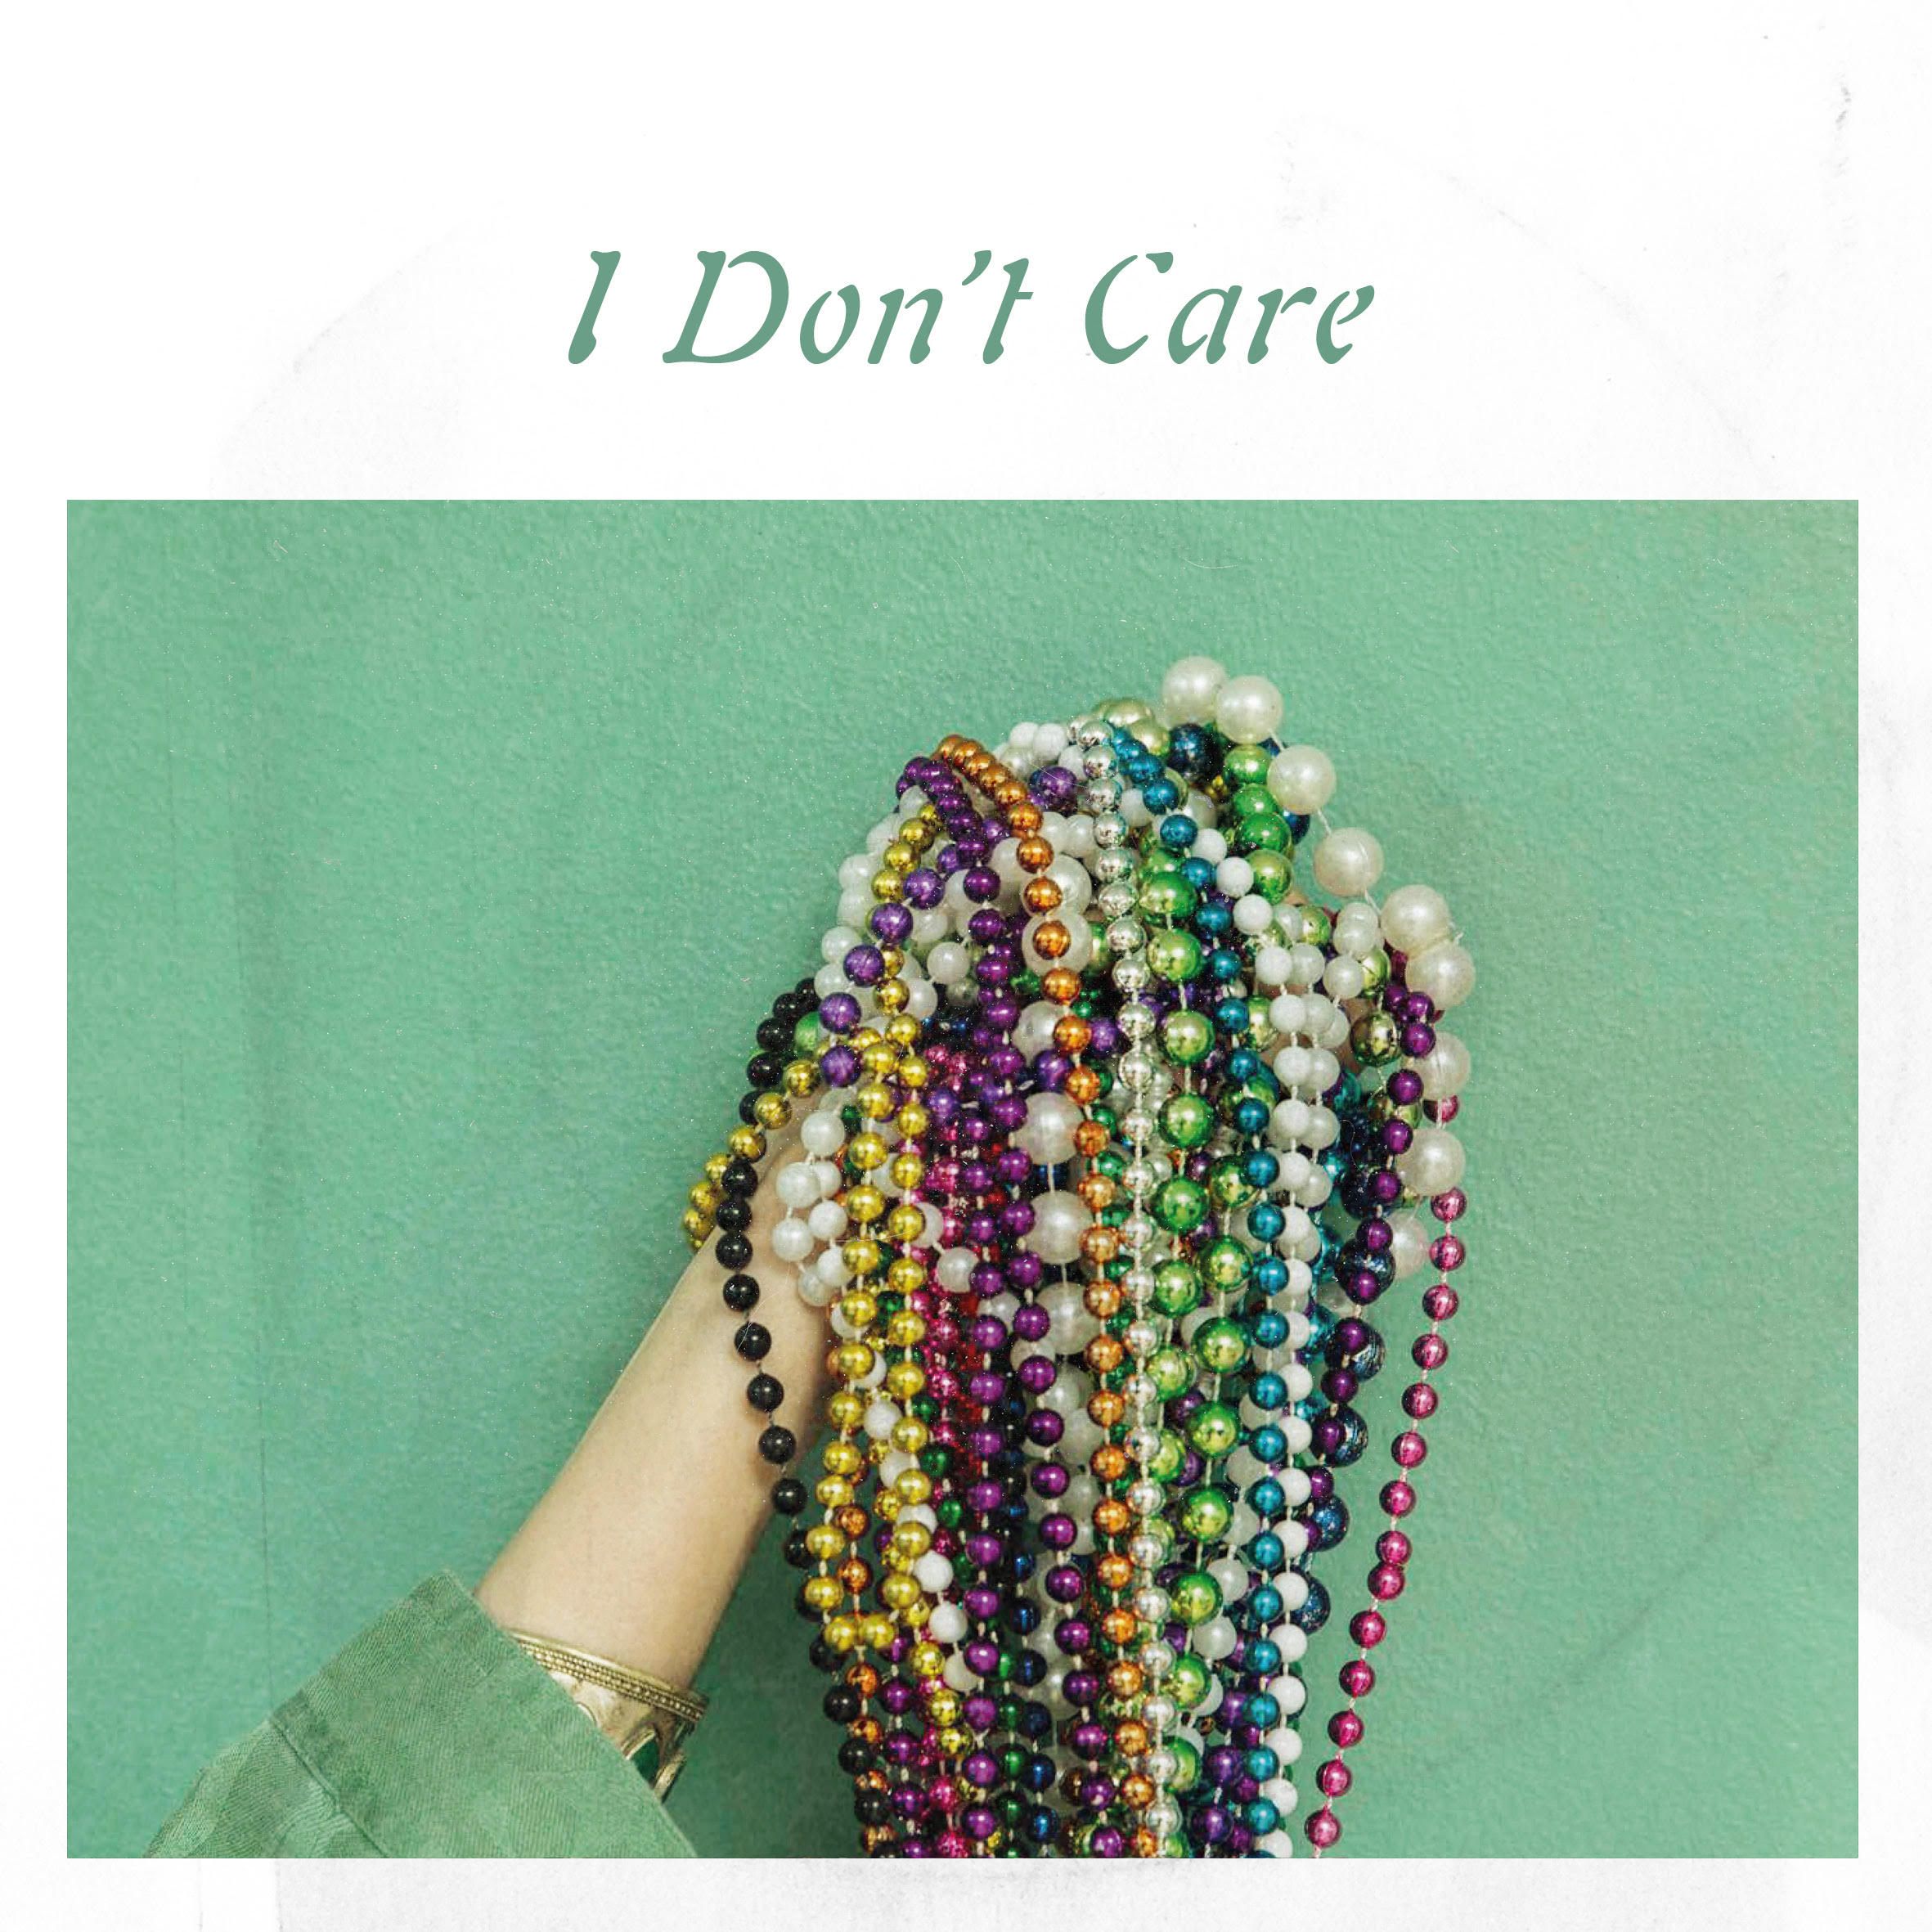 Frøkedal – “I Don’t Care”